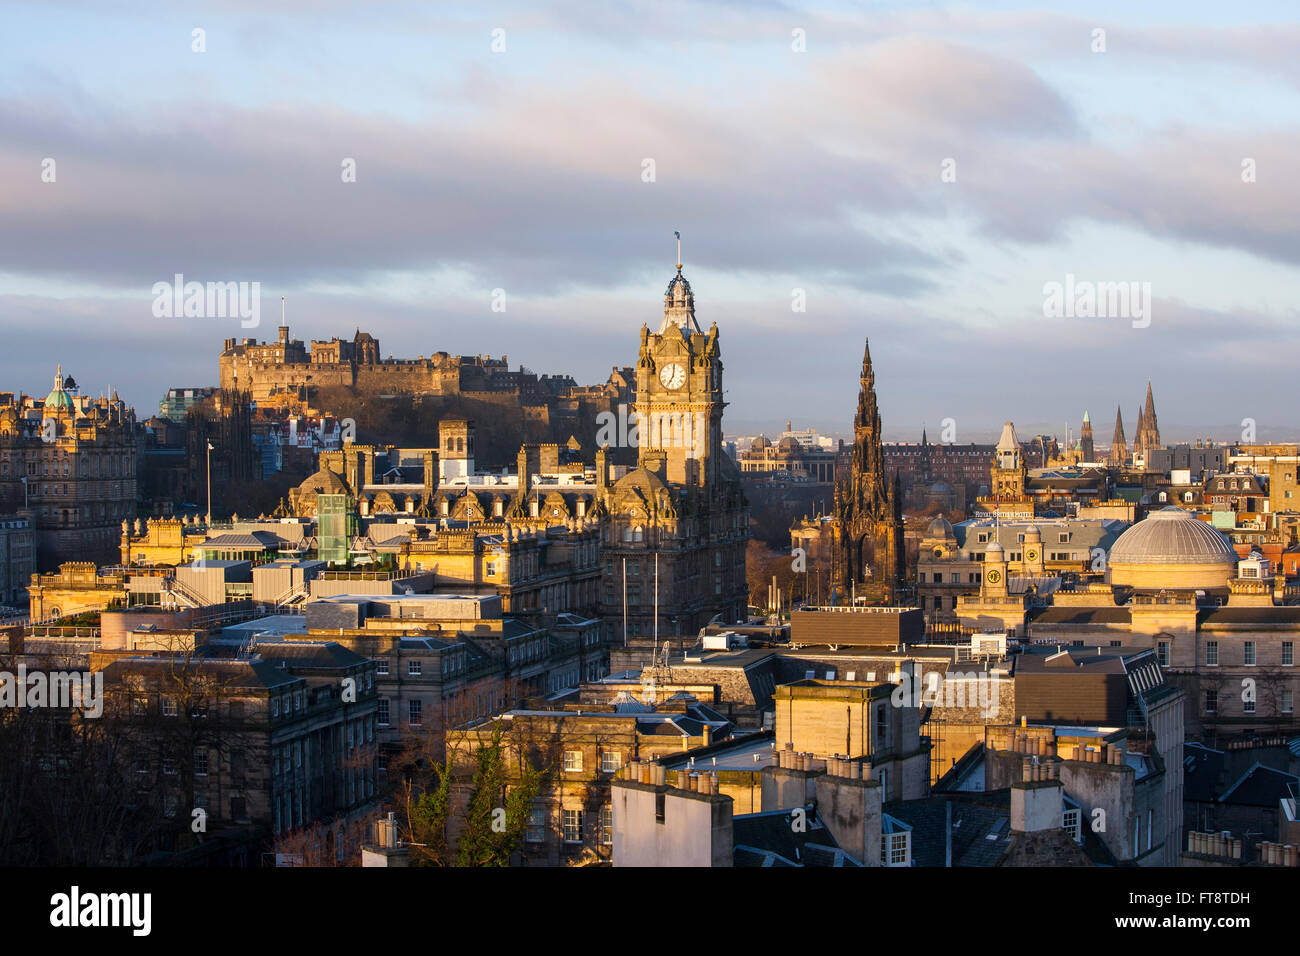 Edinburgh, City of Edinburgh, Scotland. View of the city skyline from Calton Hill, sunrise, the Balmoral Hotel prominent. Stock Photo